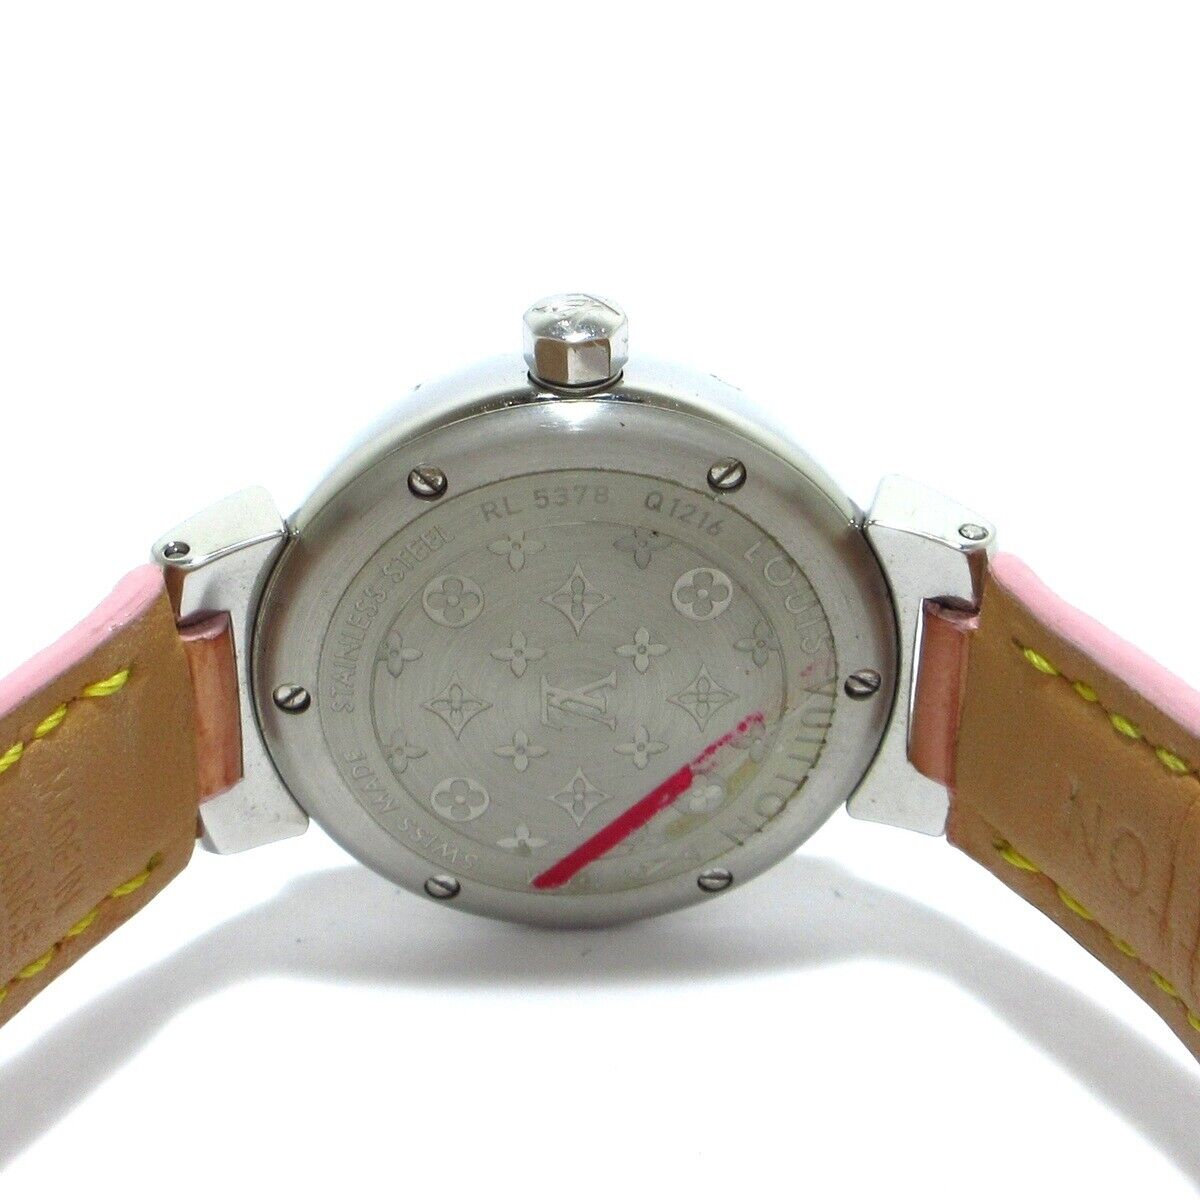 Louis Vuitton - Louis Vuitton Tambour Q1216 Beige Pink Leather Steel Womens  Wrist Watch